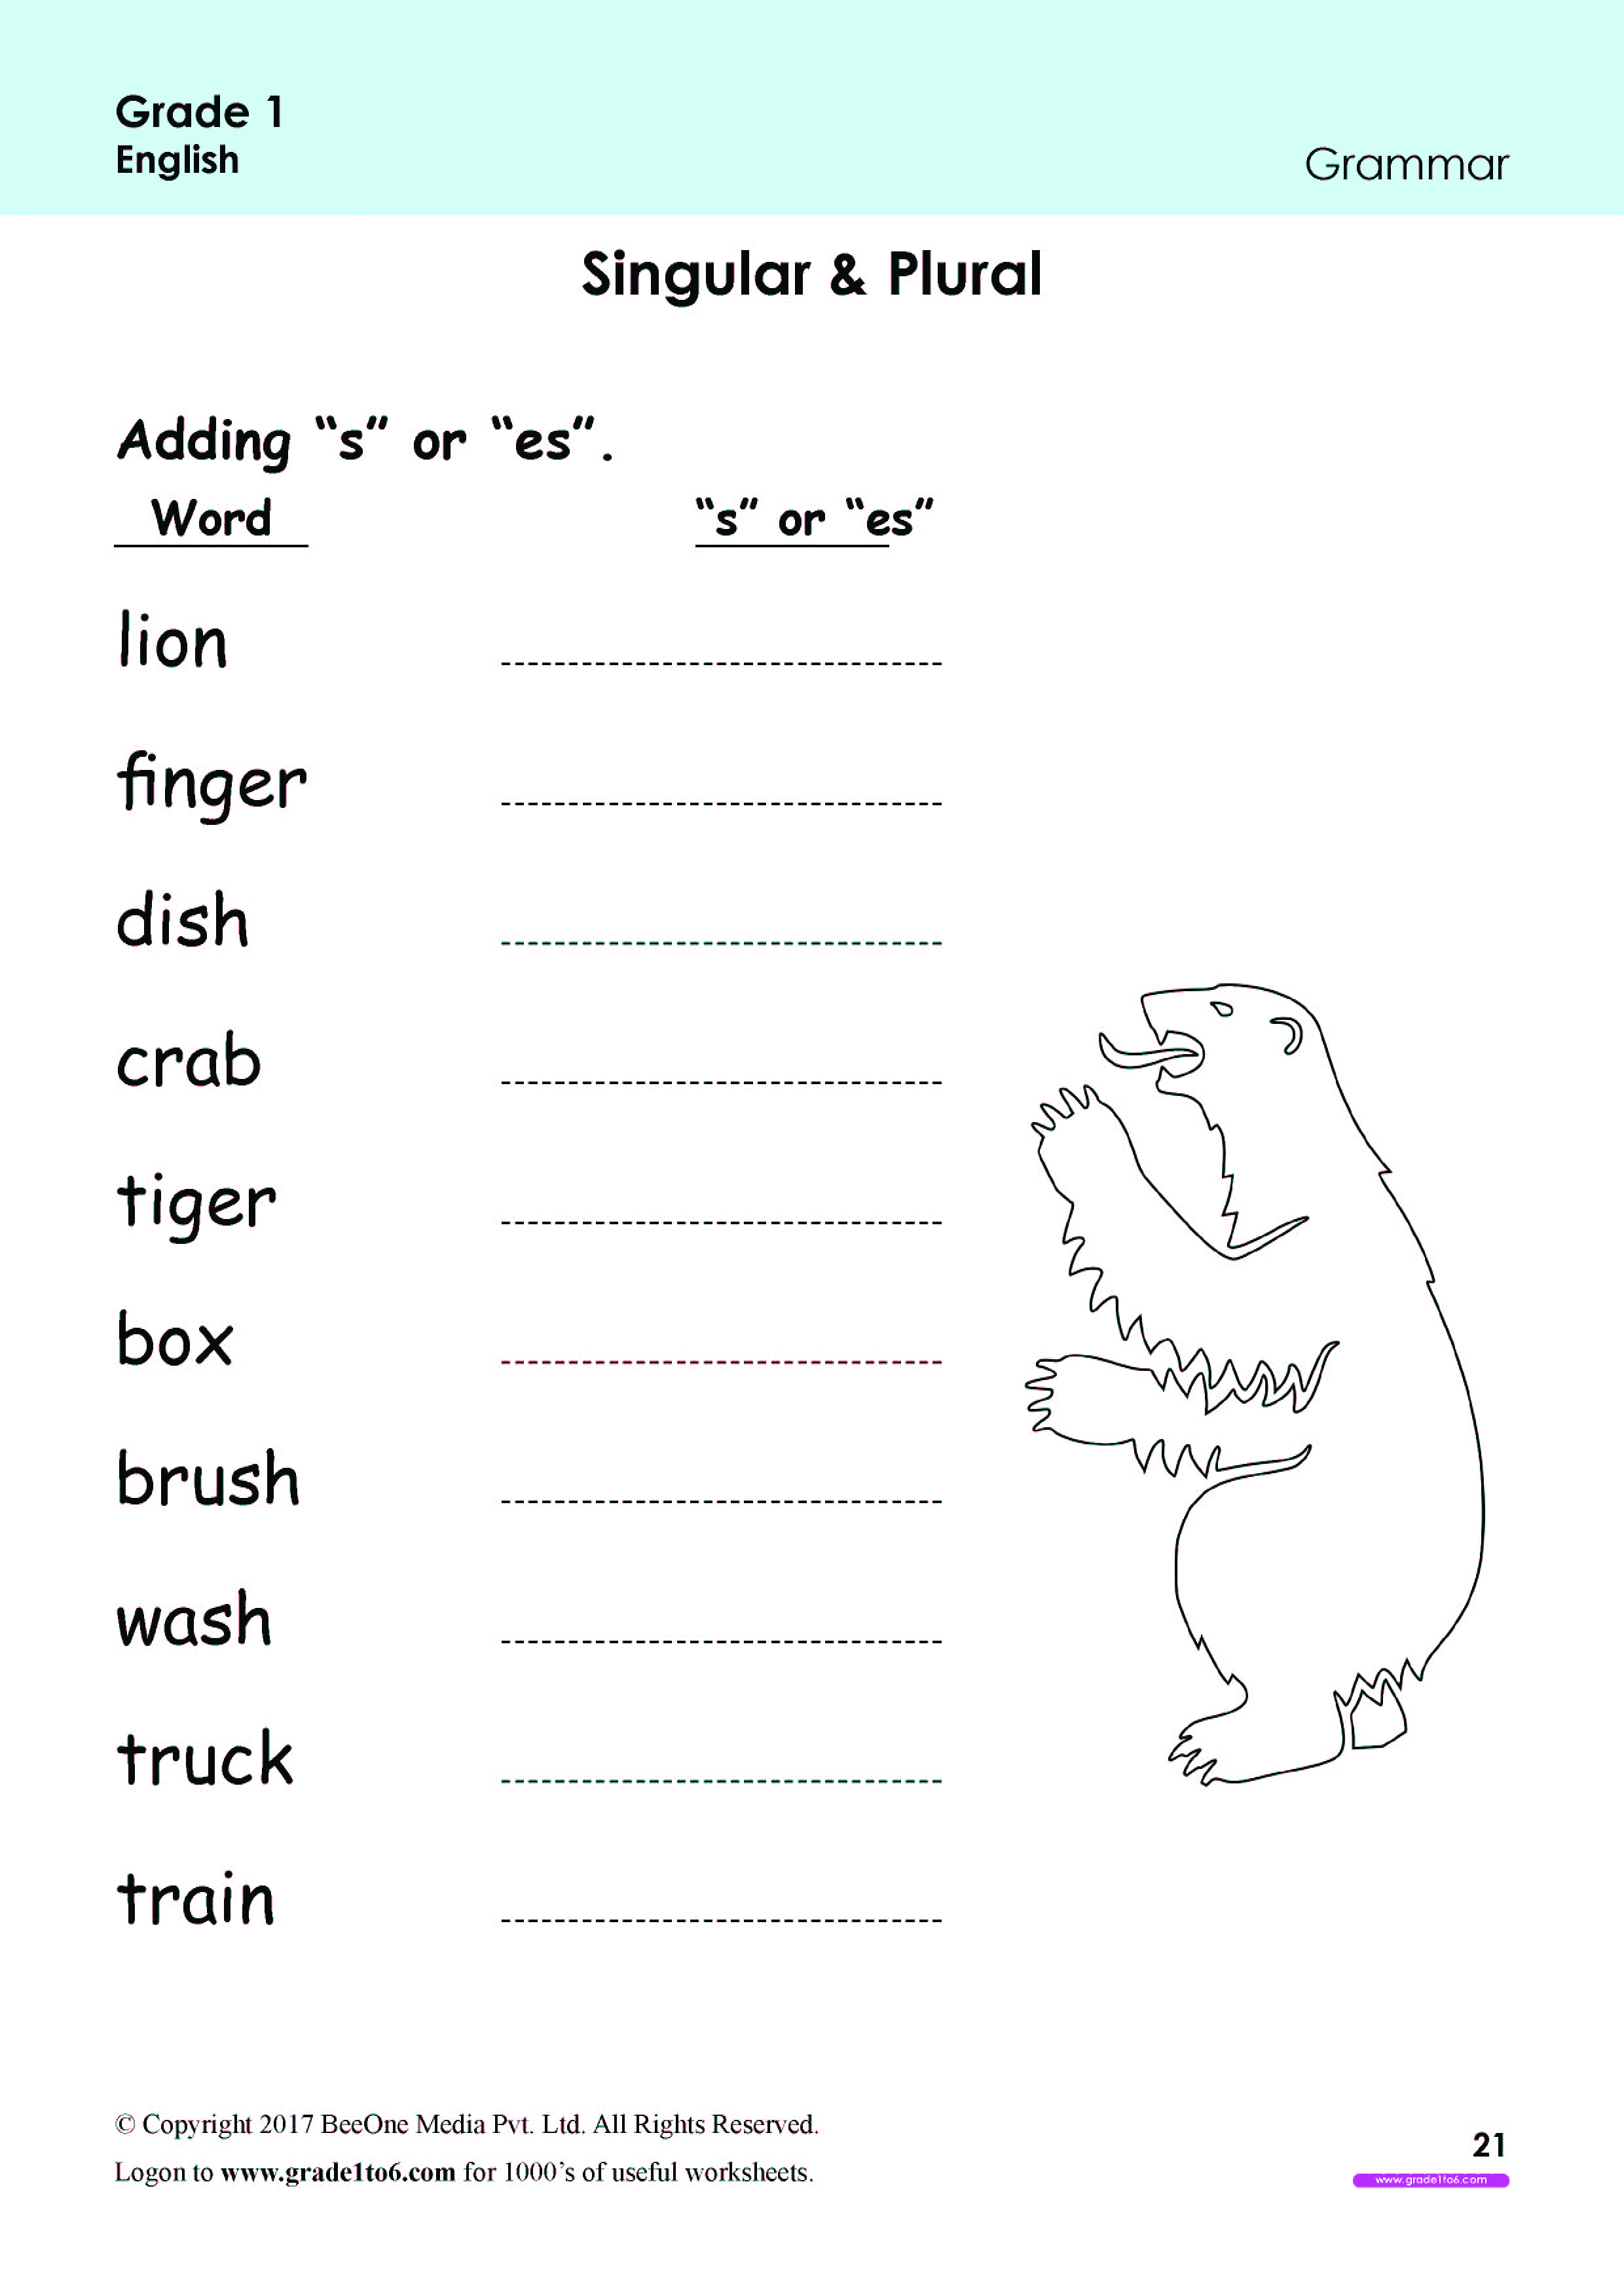 singular-plural-worksheets-for-grade-1-www-grade1to6